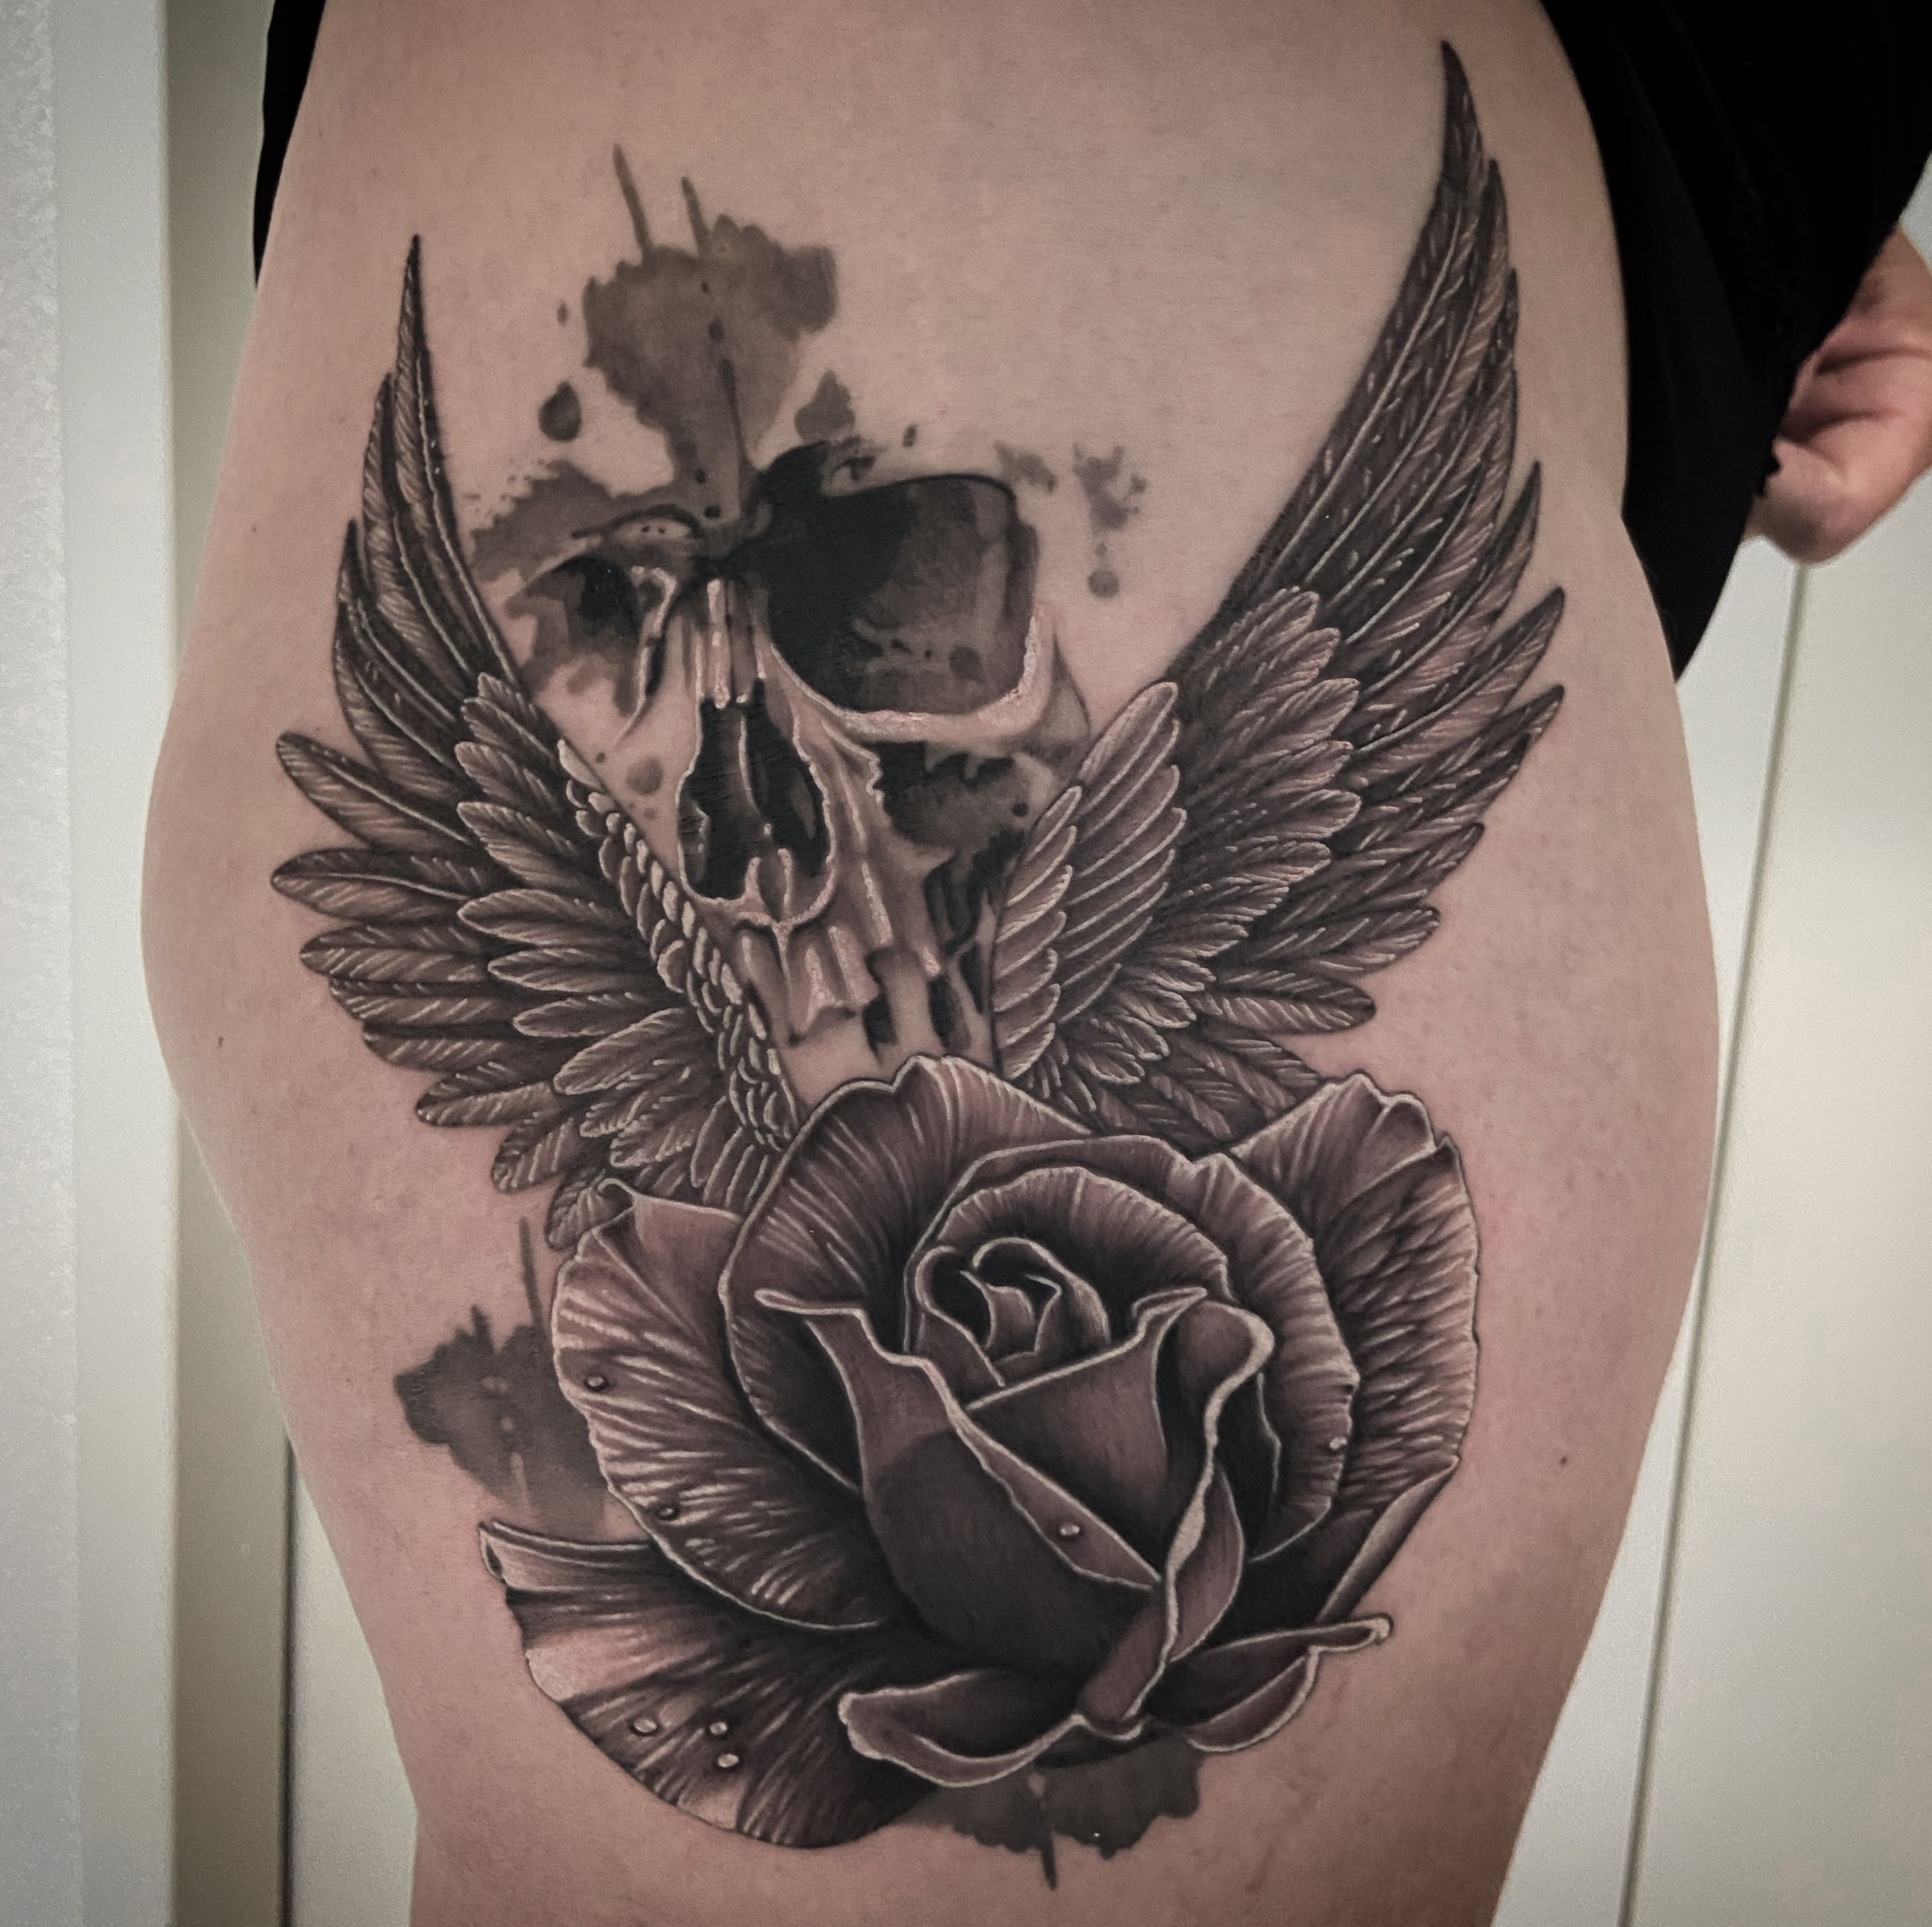 Tattoo of Skulls Roses Flowers